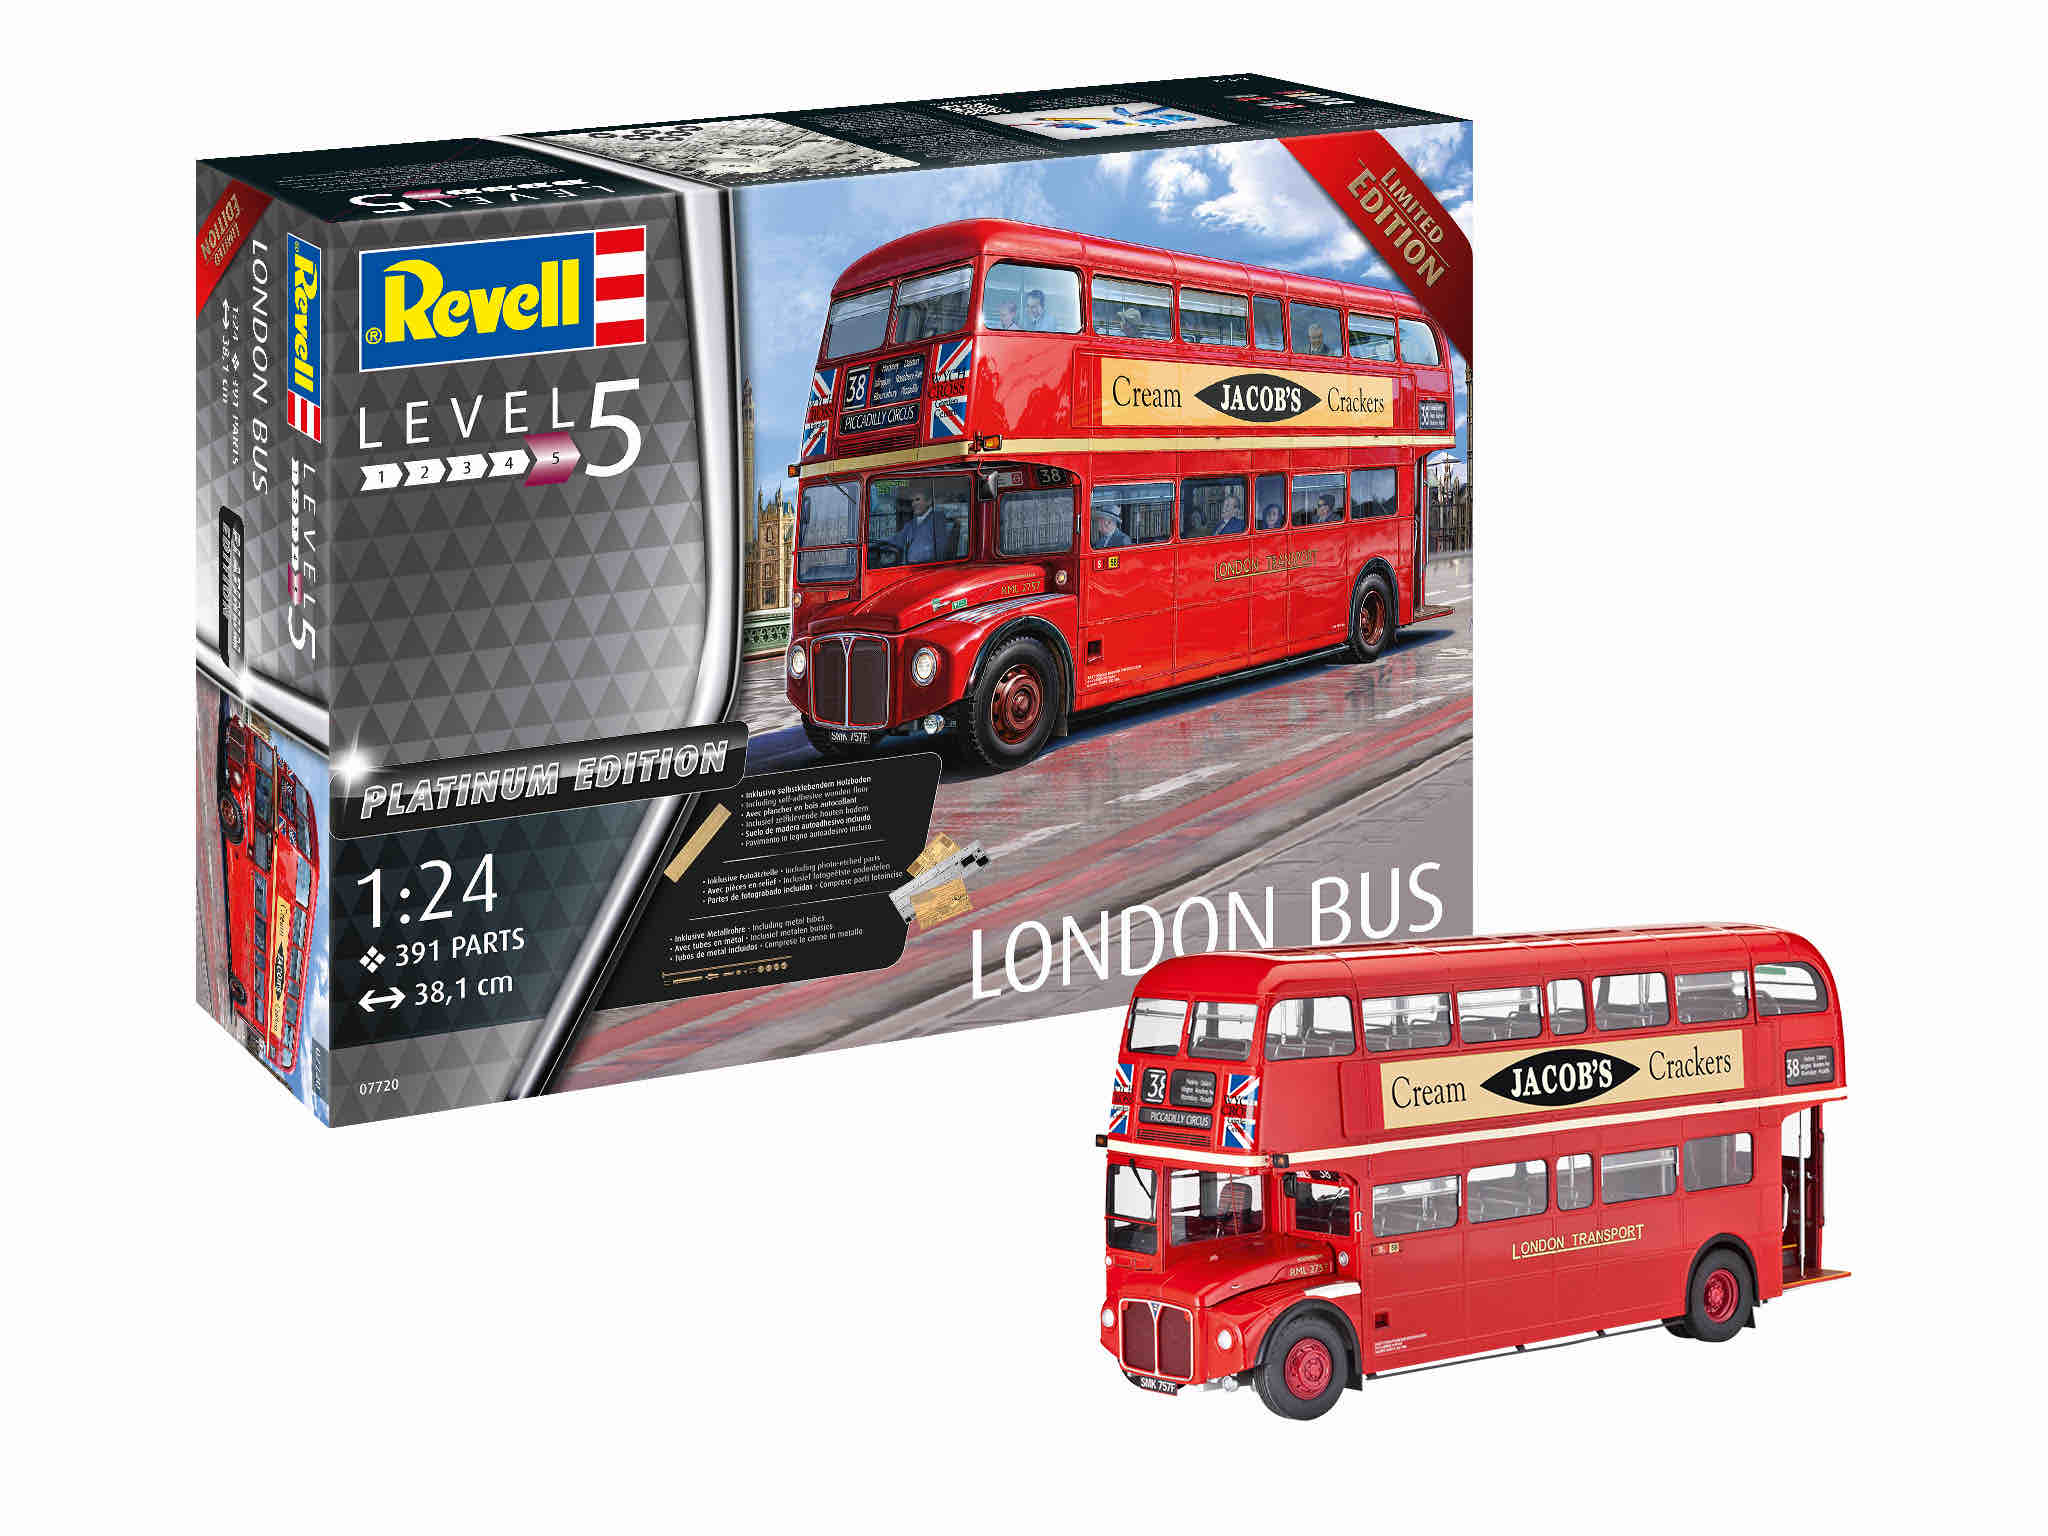 Revell London Bus Platinum Edition 1:24 bouwpakket ( van 159,95 nu 99,95)